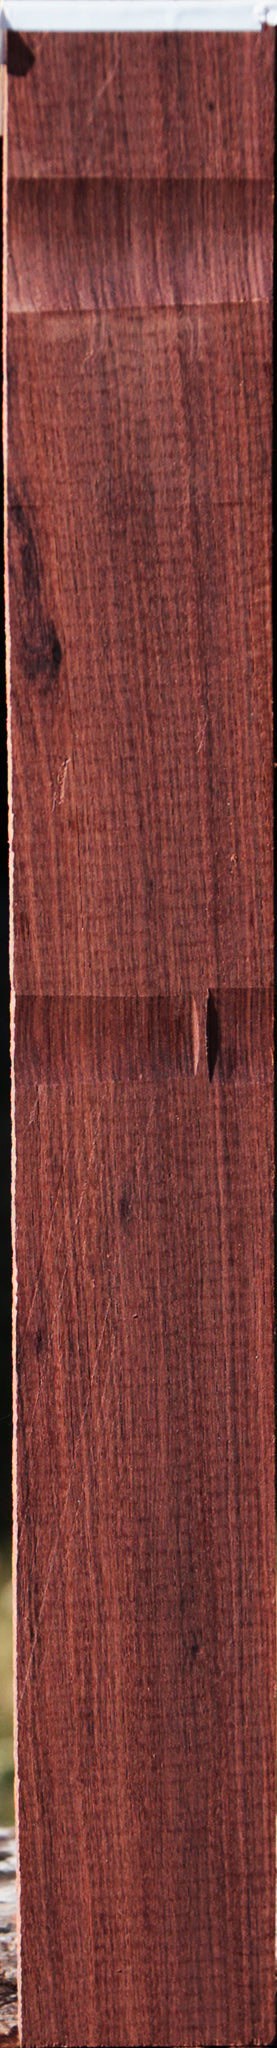 Madagascar Rosewood Micro Lumber